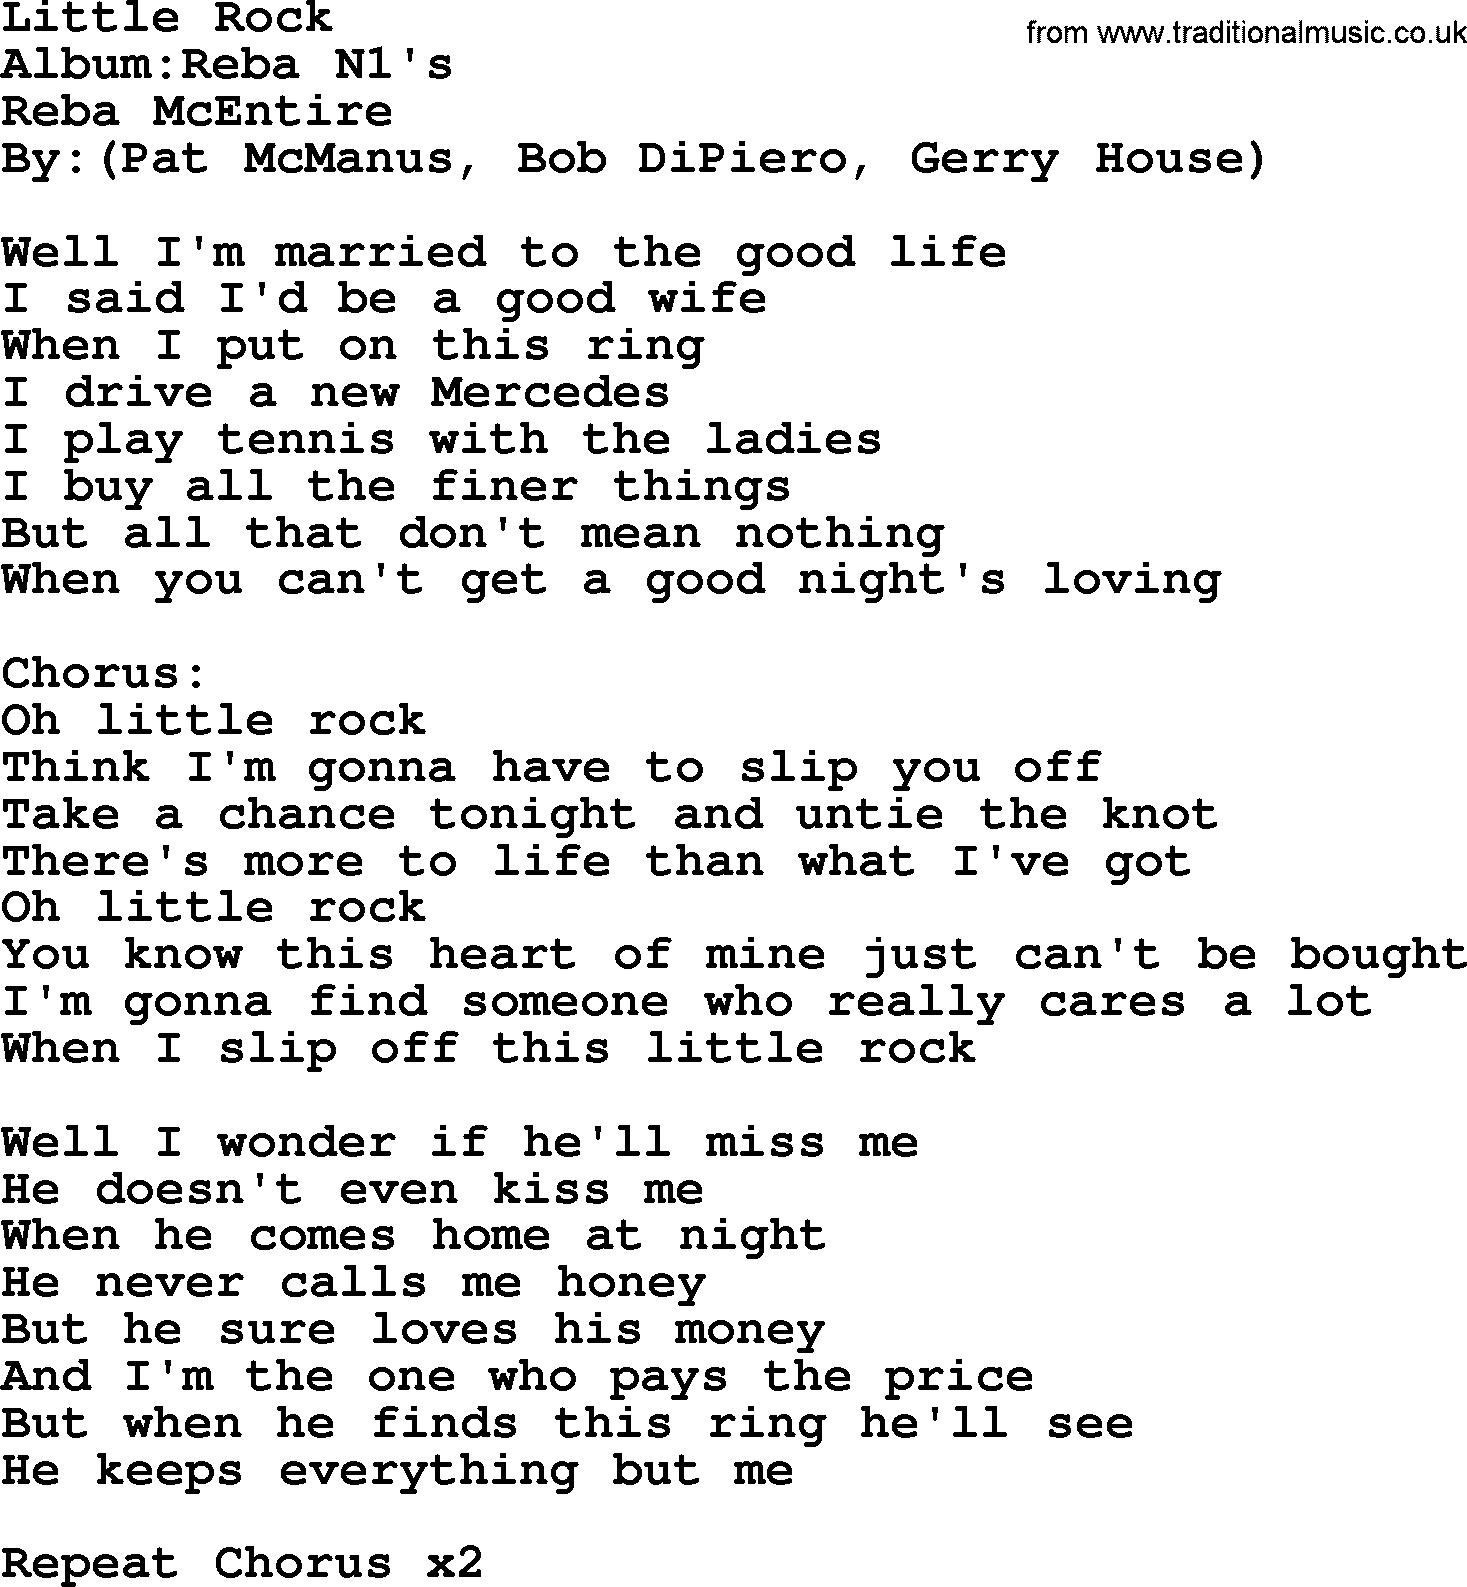 Reba McEntire song: Little Rock lyrics